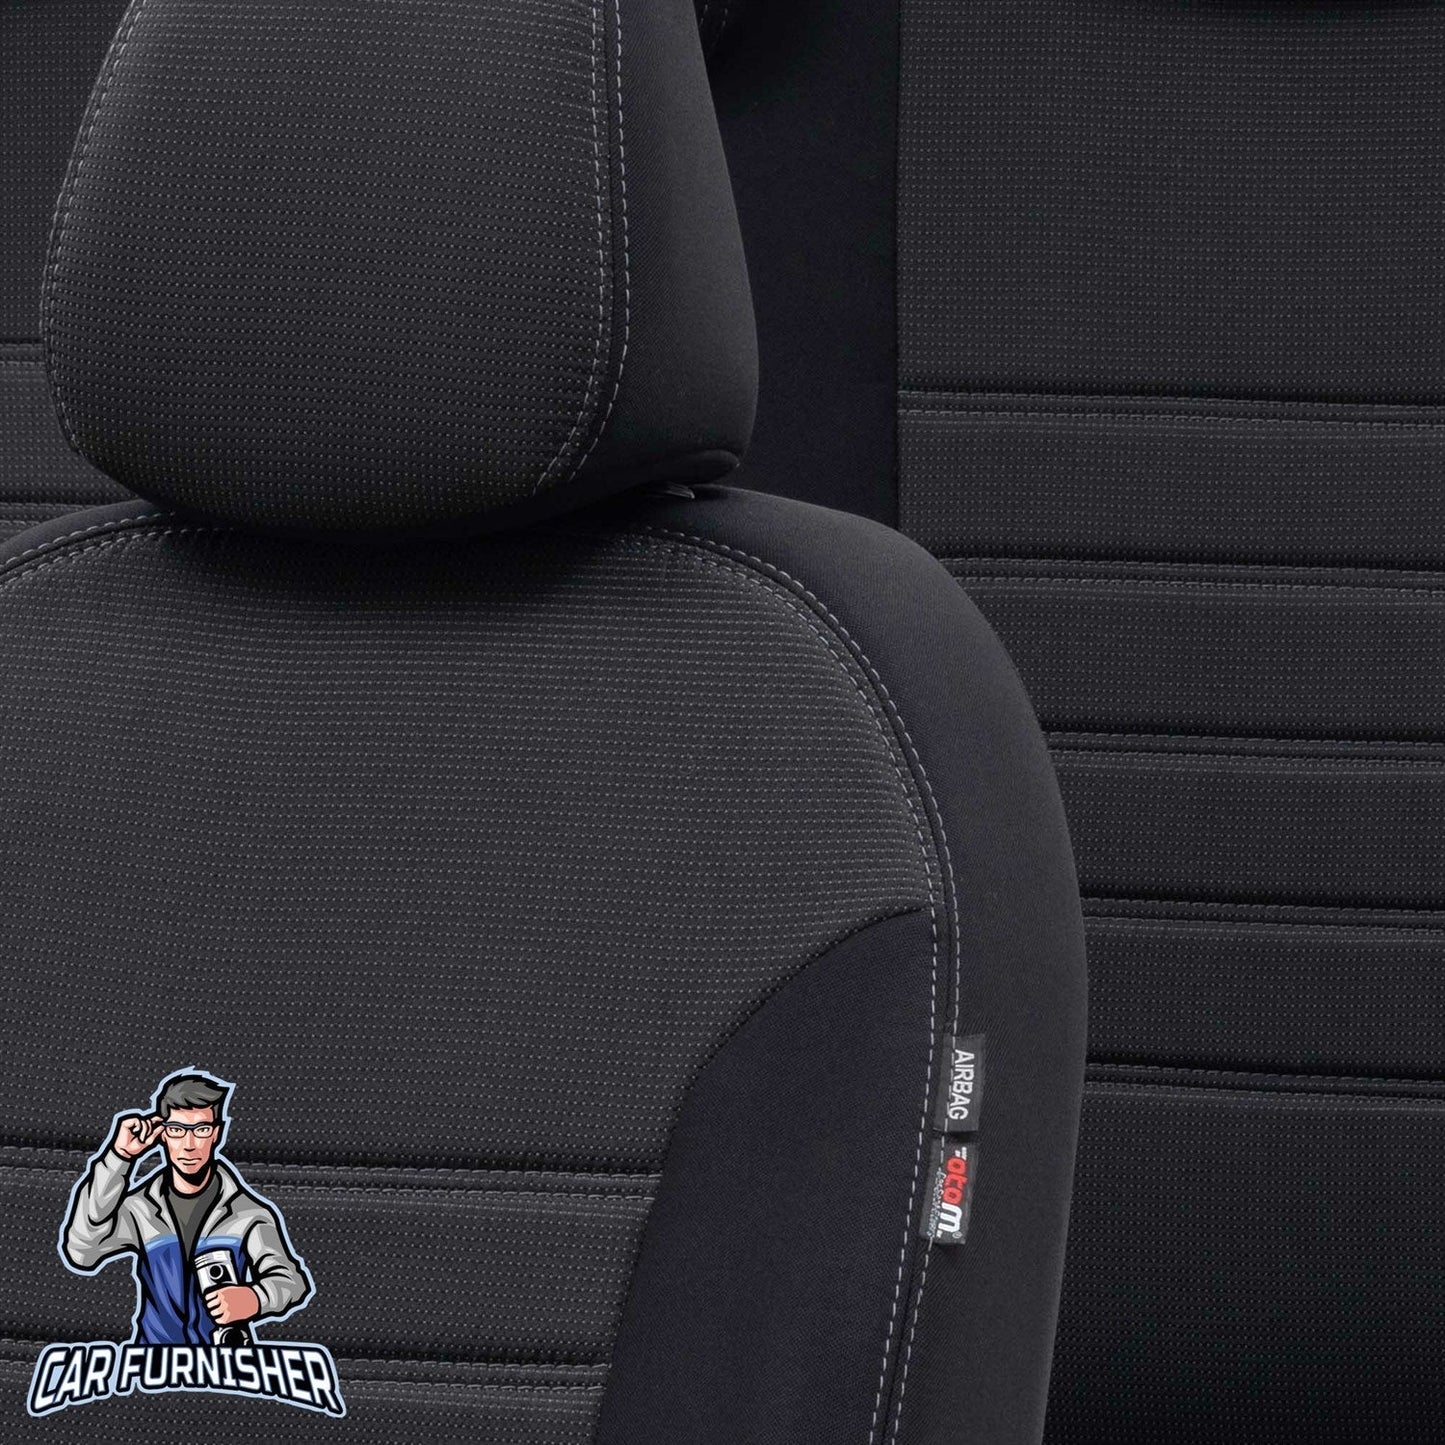 Renault Captur Seat Covers Original Jacquard Design Dark Gray Jacquard Fabric